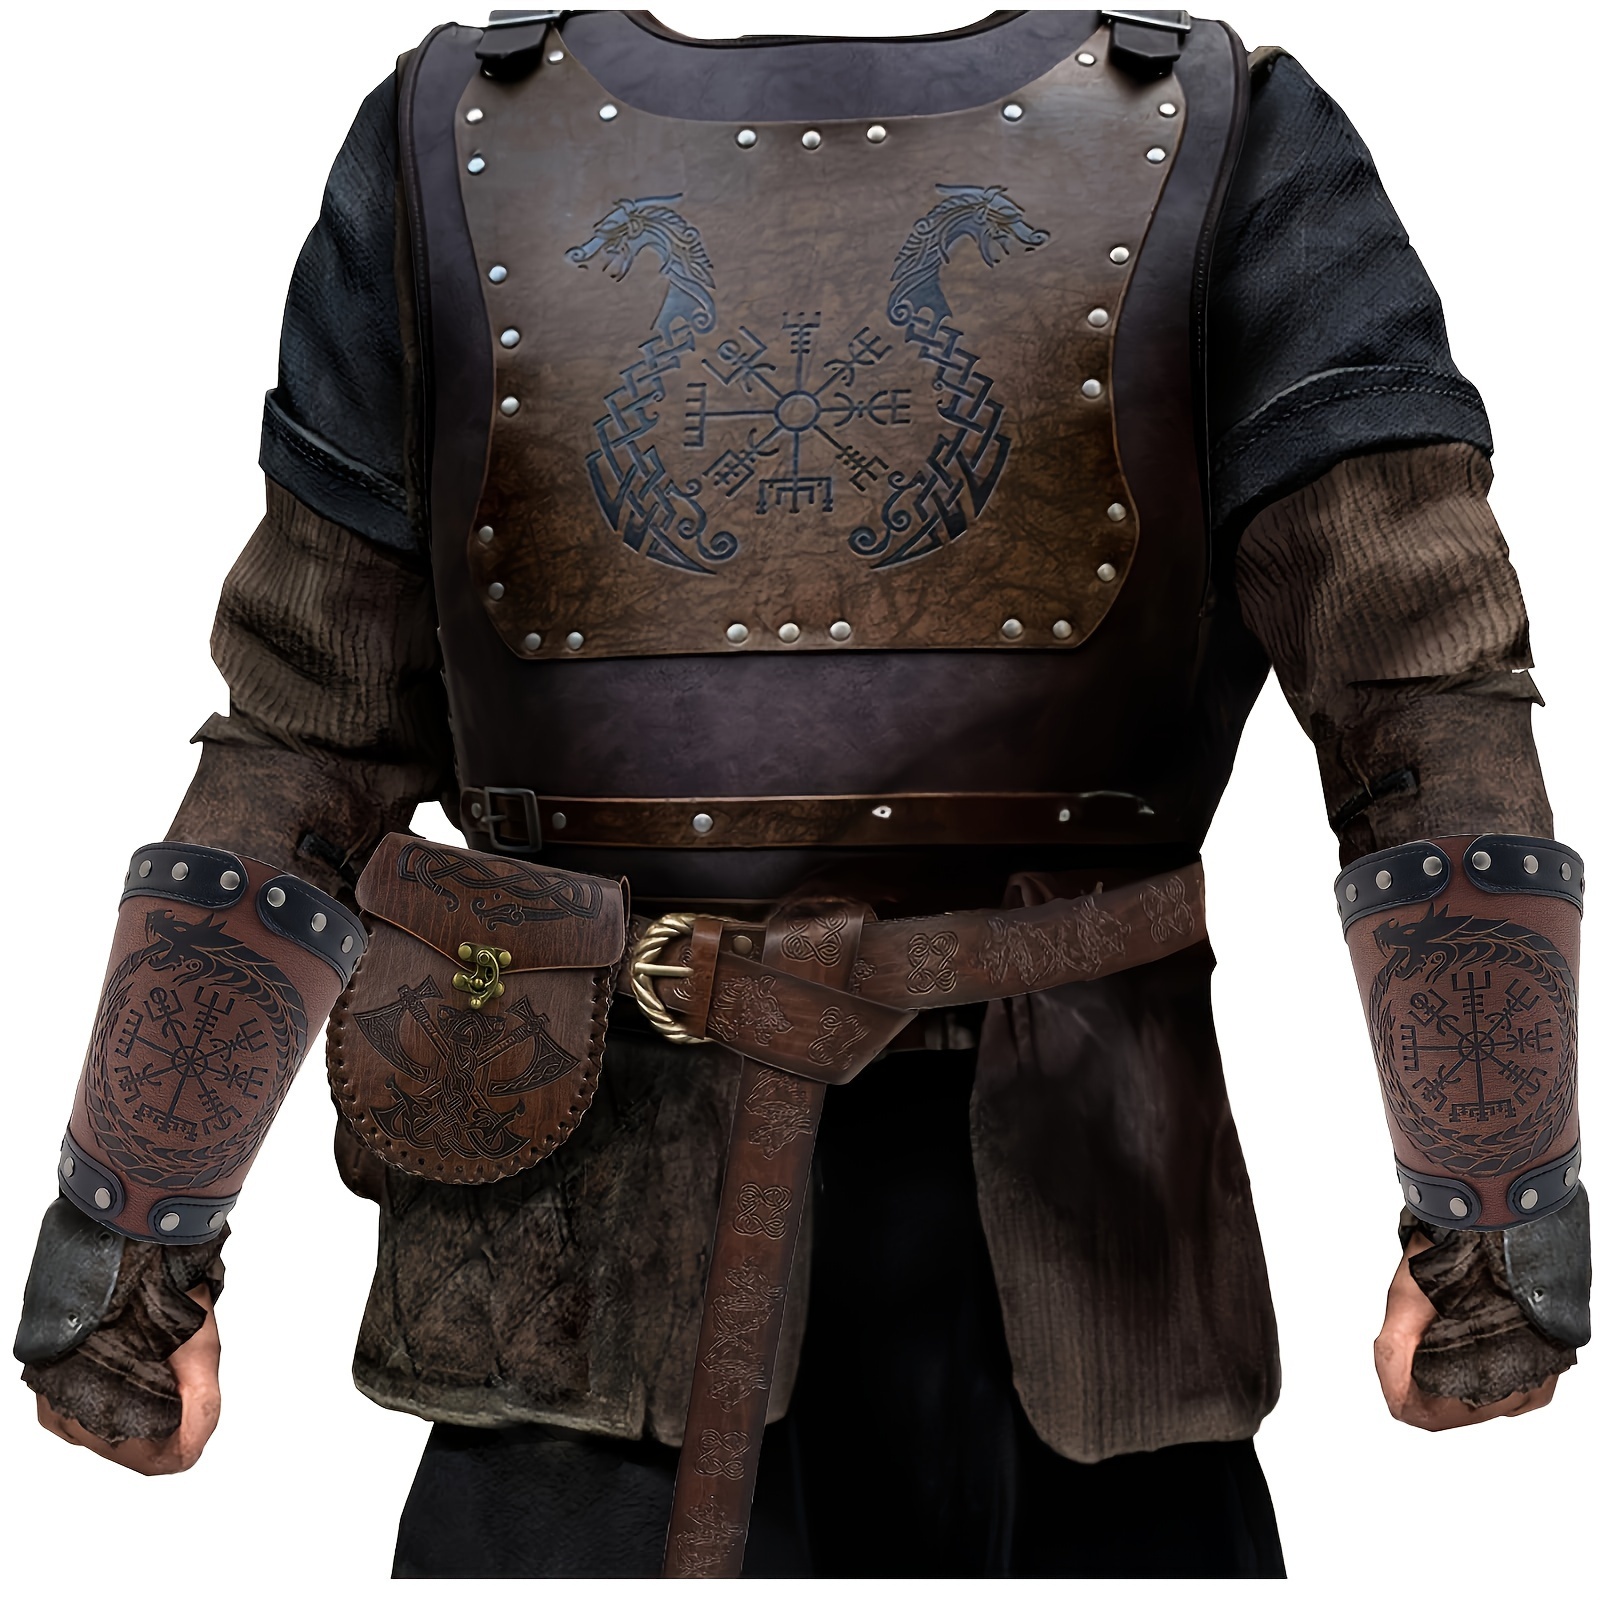 Medieval Samurai PU Leather Armor Bracer Guard Gloves Knight